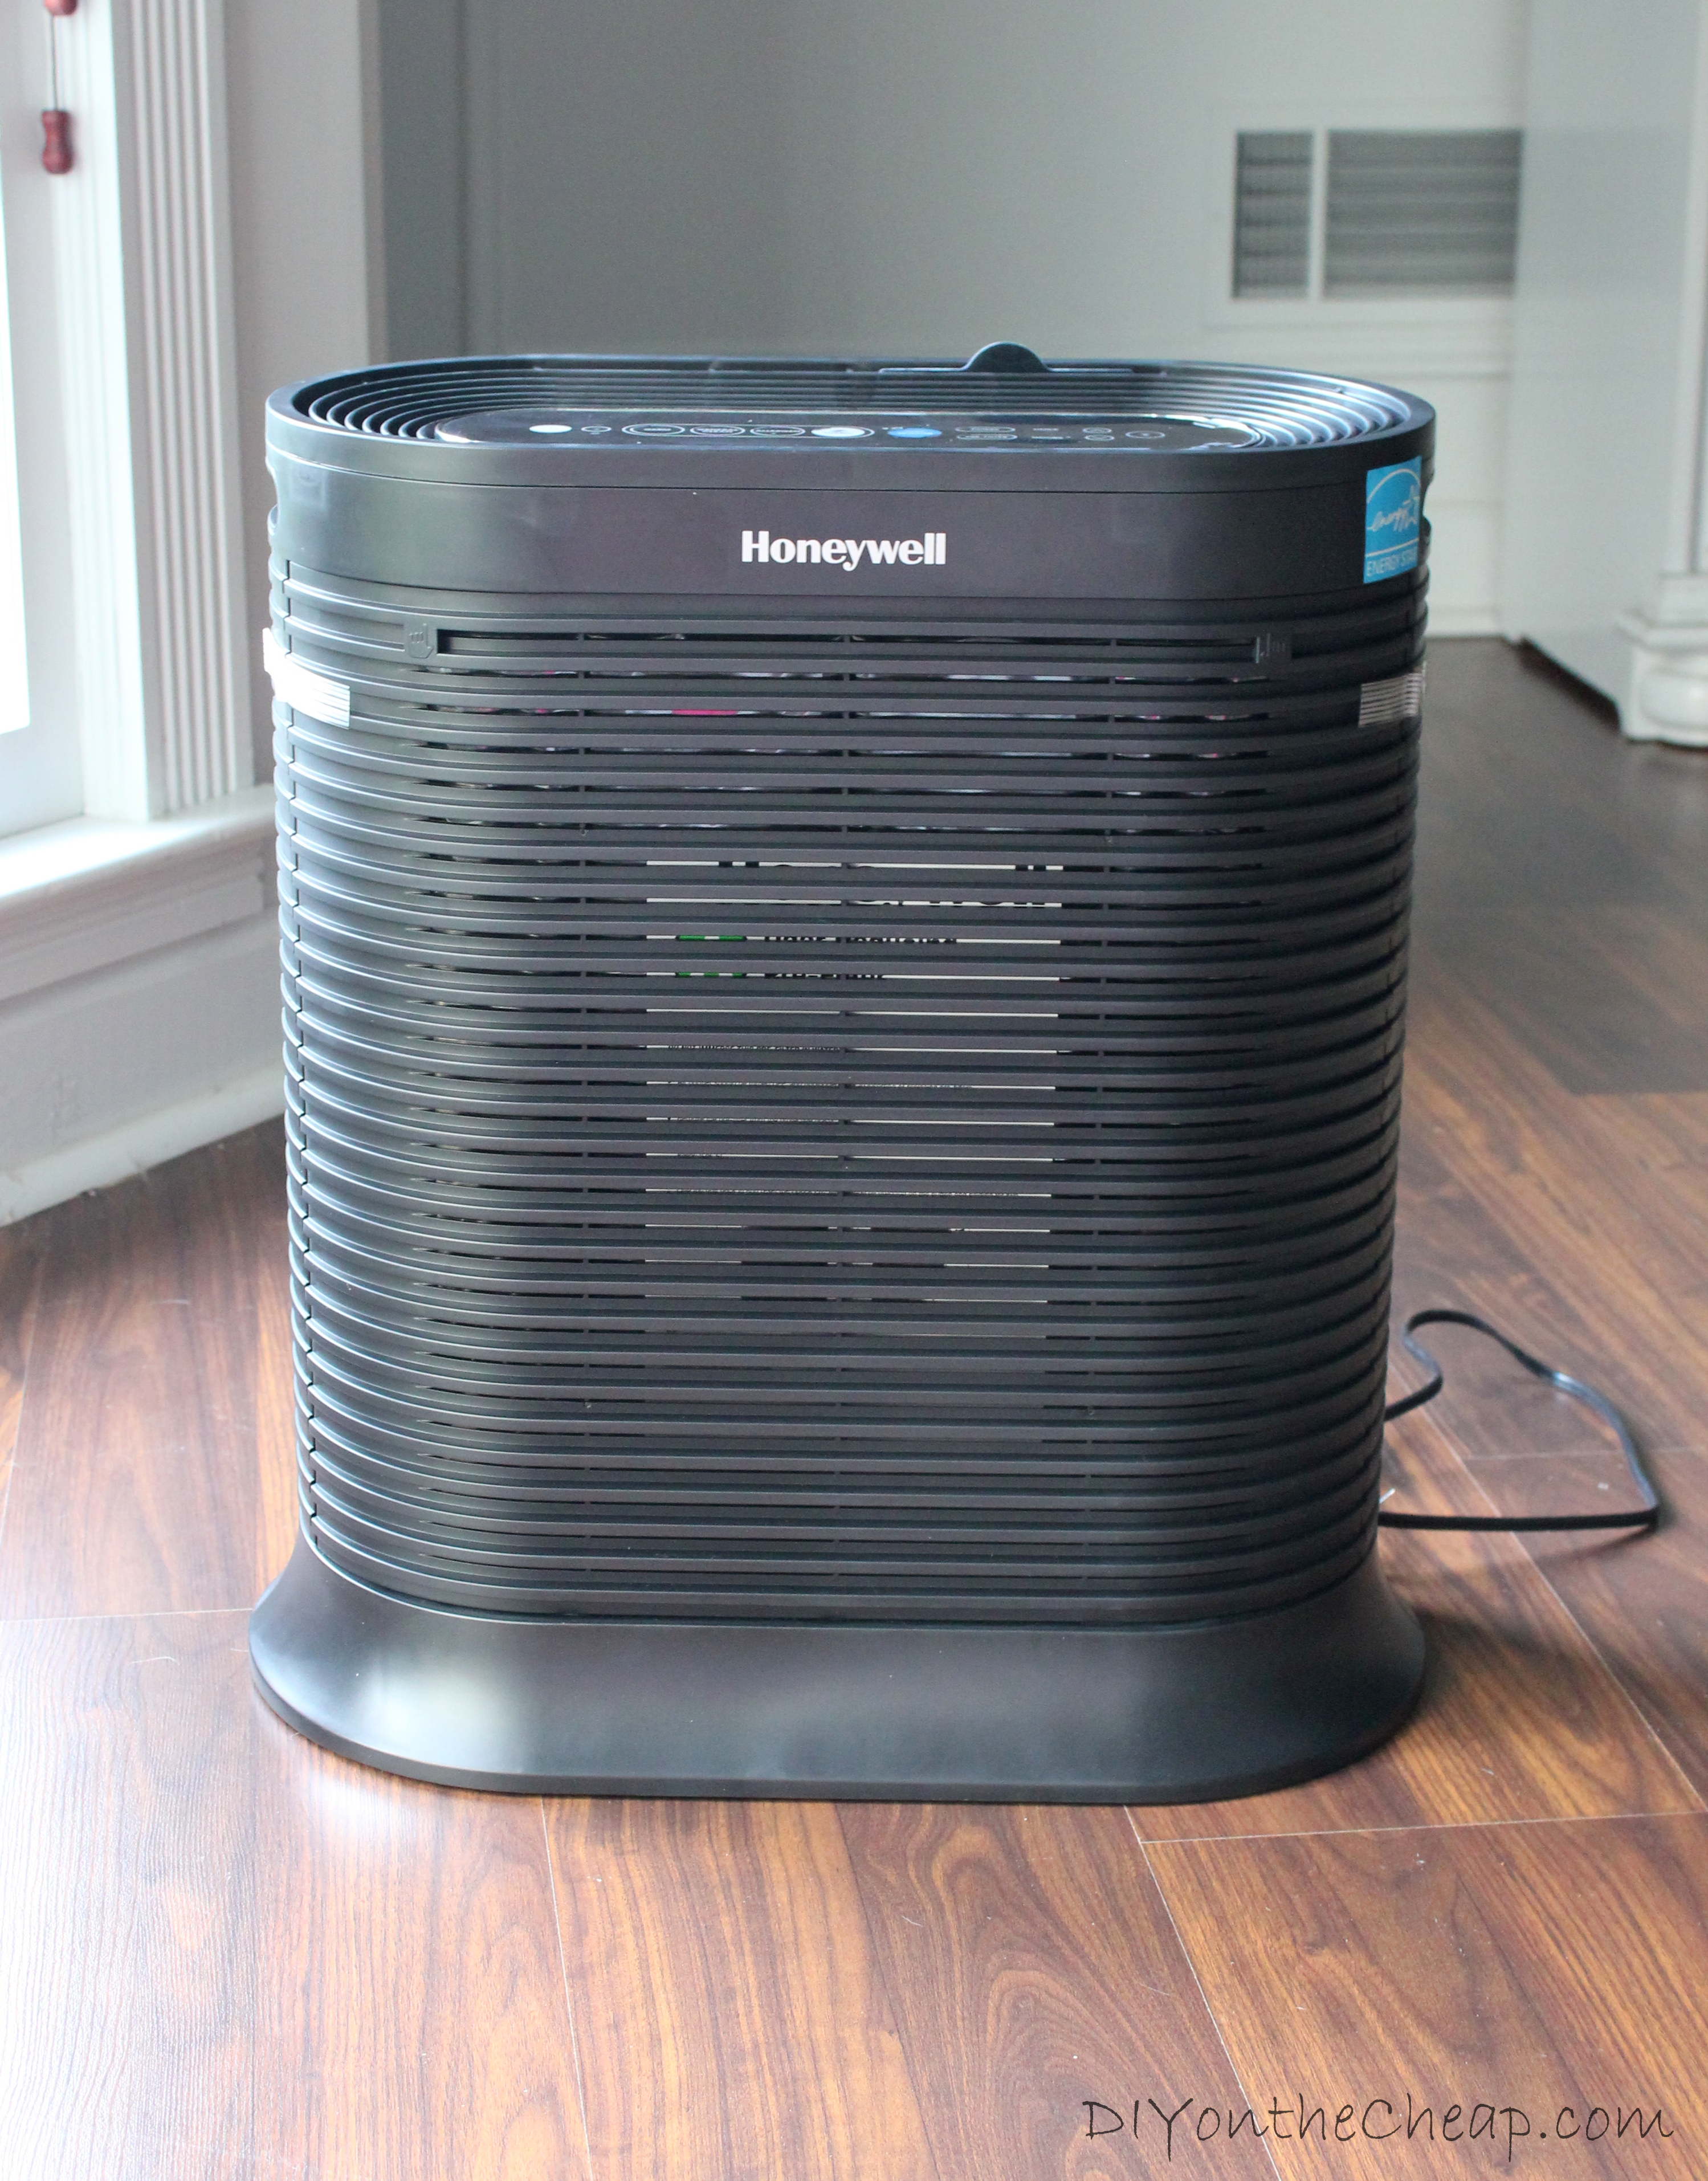 Amazing air purifier from Honeywell!